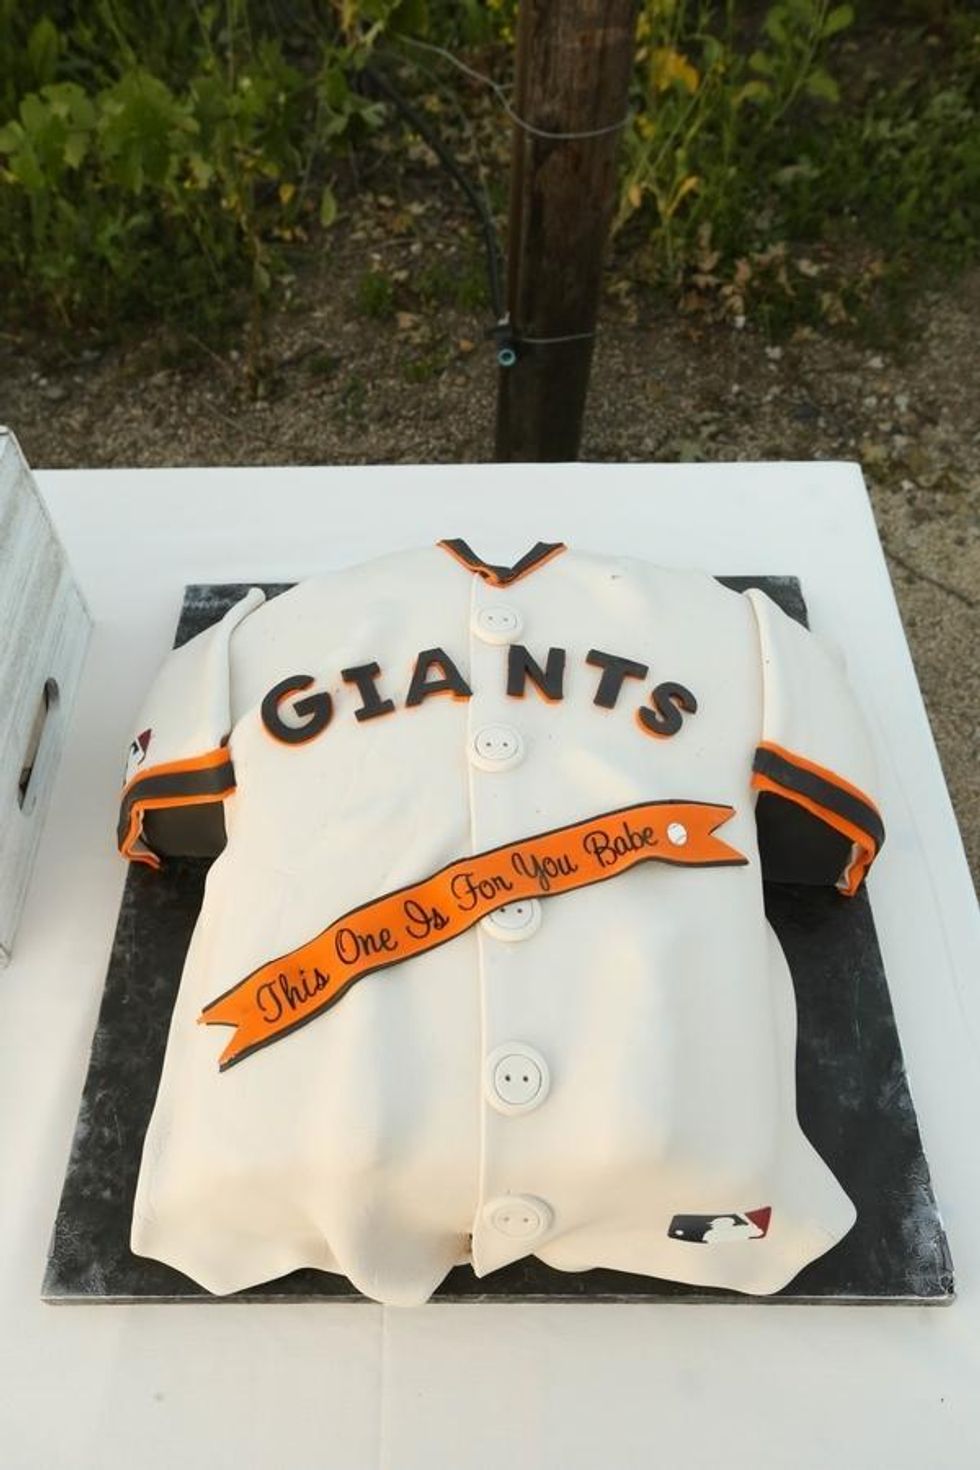 San Francisco Giants birthday cake ac*****@*****